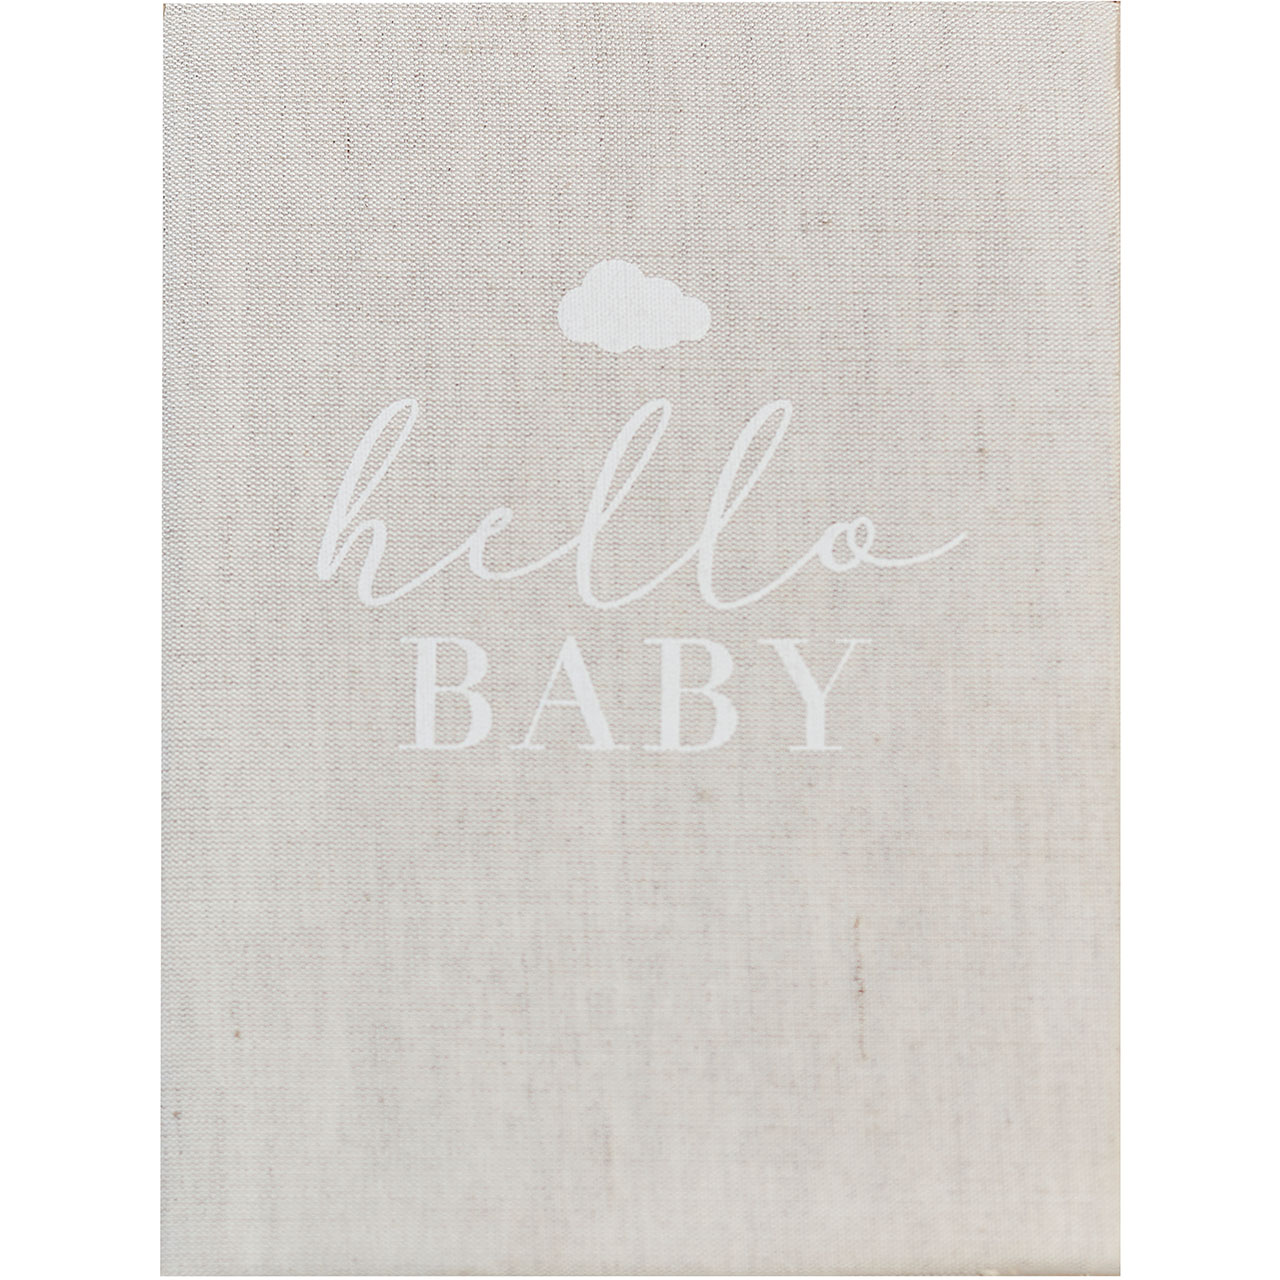 Gift - Hello Baby Linen Baby Journal